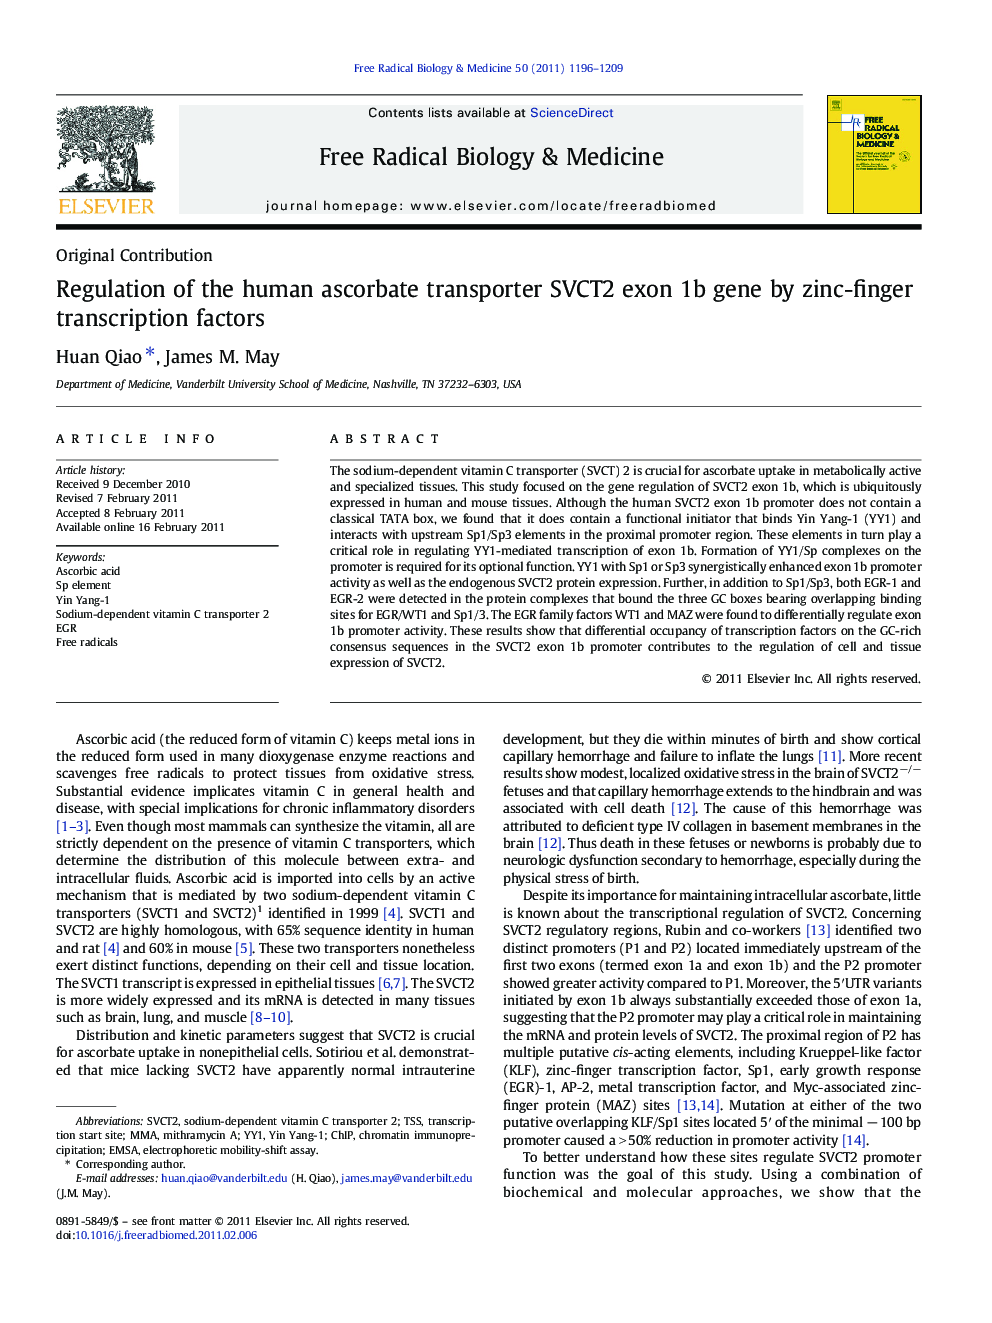 Regulation of the human ascorbate transporter SVCT2 exon 1b gene by zinc-finger transcription factors